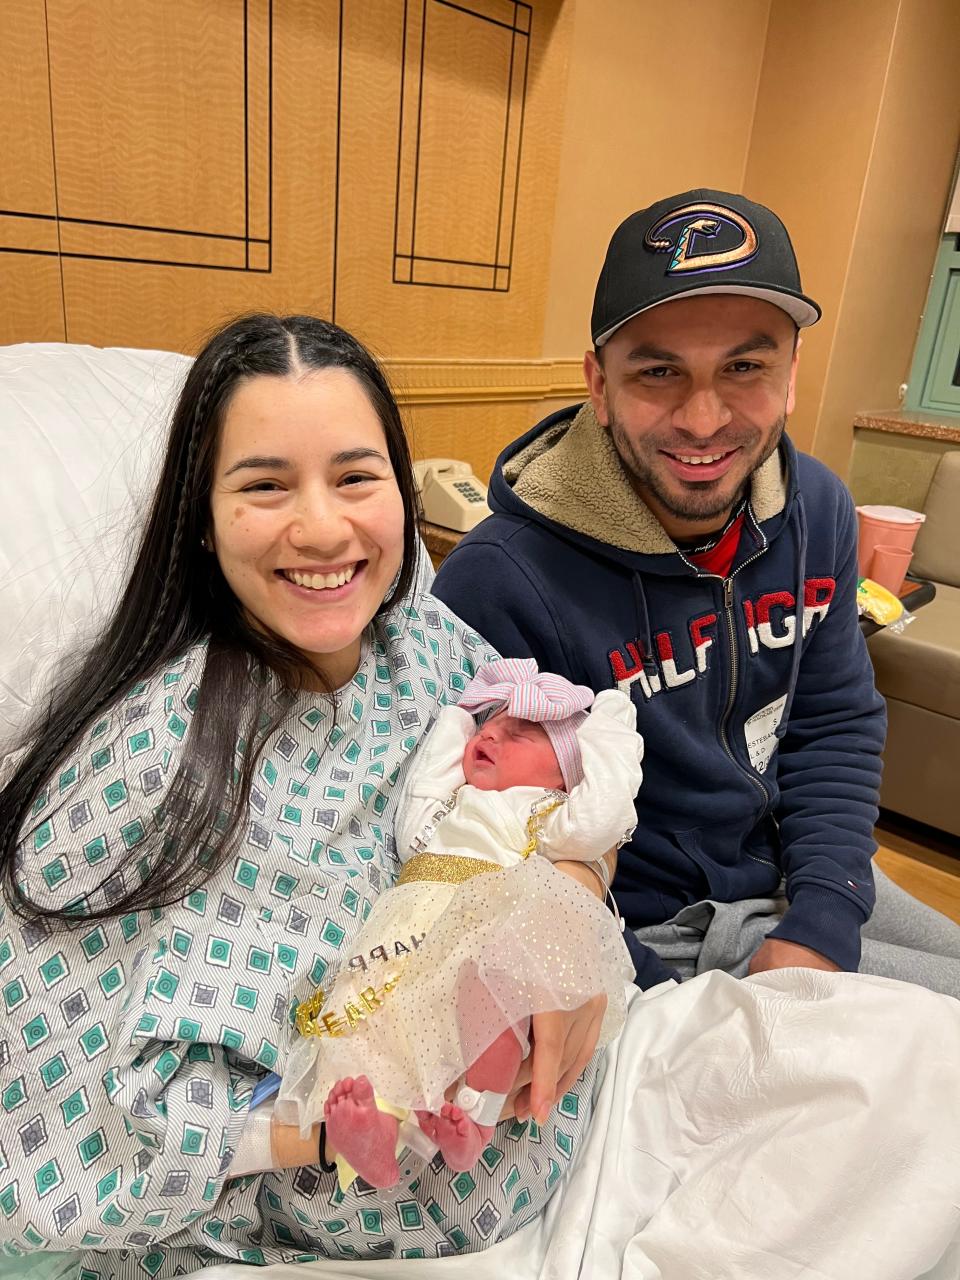 Jessica Johanna Cardona-Giraldo and Esteban Josue Aguirre Monterrosa of Dunellen welcomed their baby girl, Belen Aguirre Cardona, at 12:01 a.m. Monday at Saint Peter's University Hospital in New Brunswick.